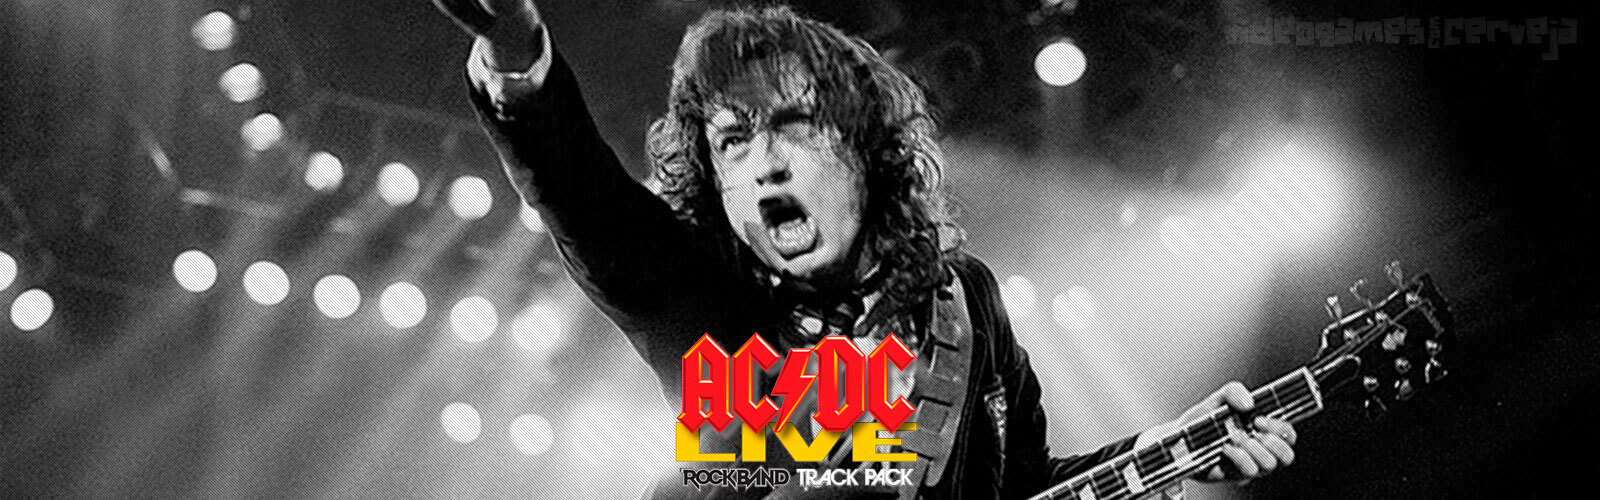 Análise - AC/DC Live: Rockband Track Pack Cover